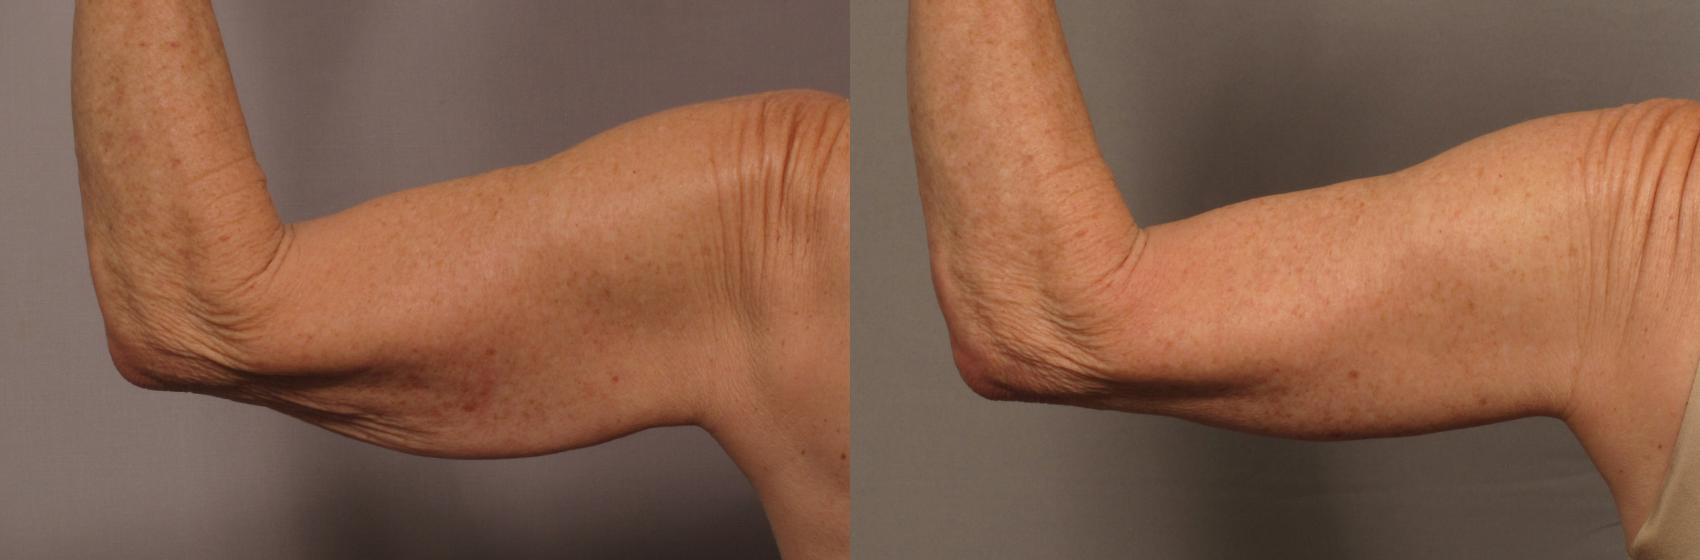 Posterior View of Left Upper Arm Before Arm Lift (Brachioplasty)